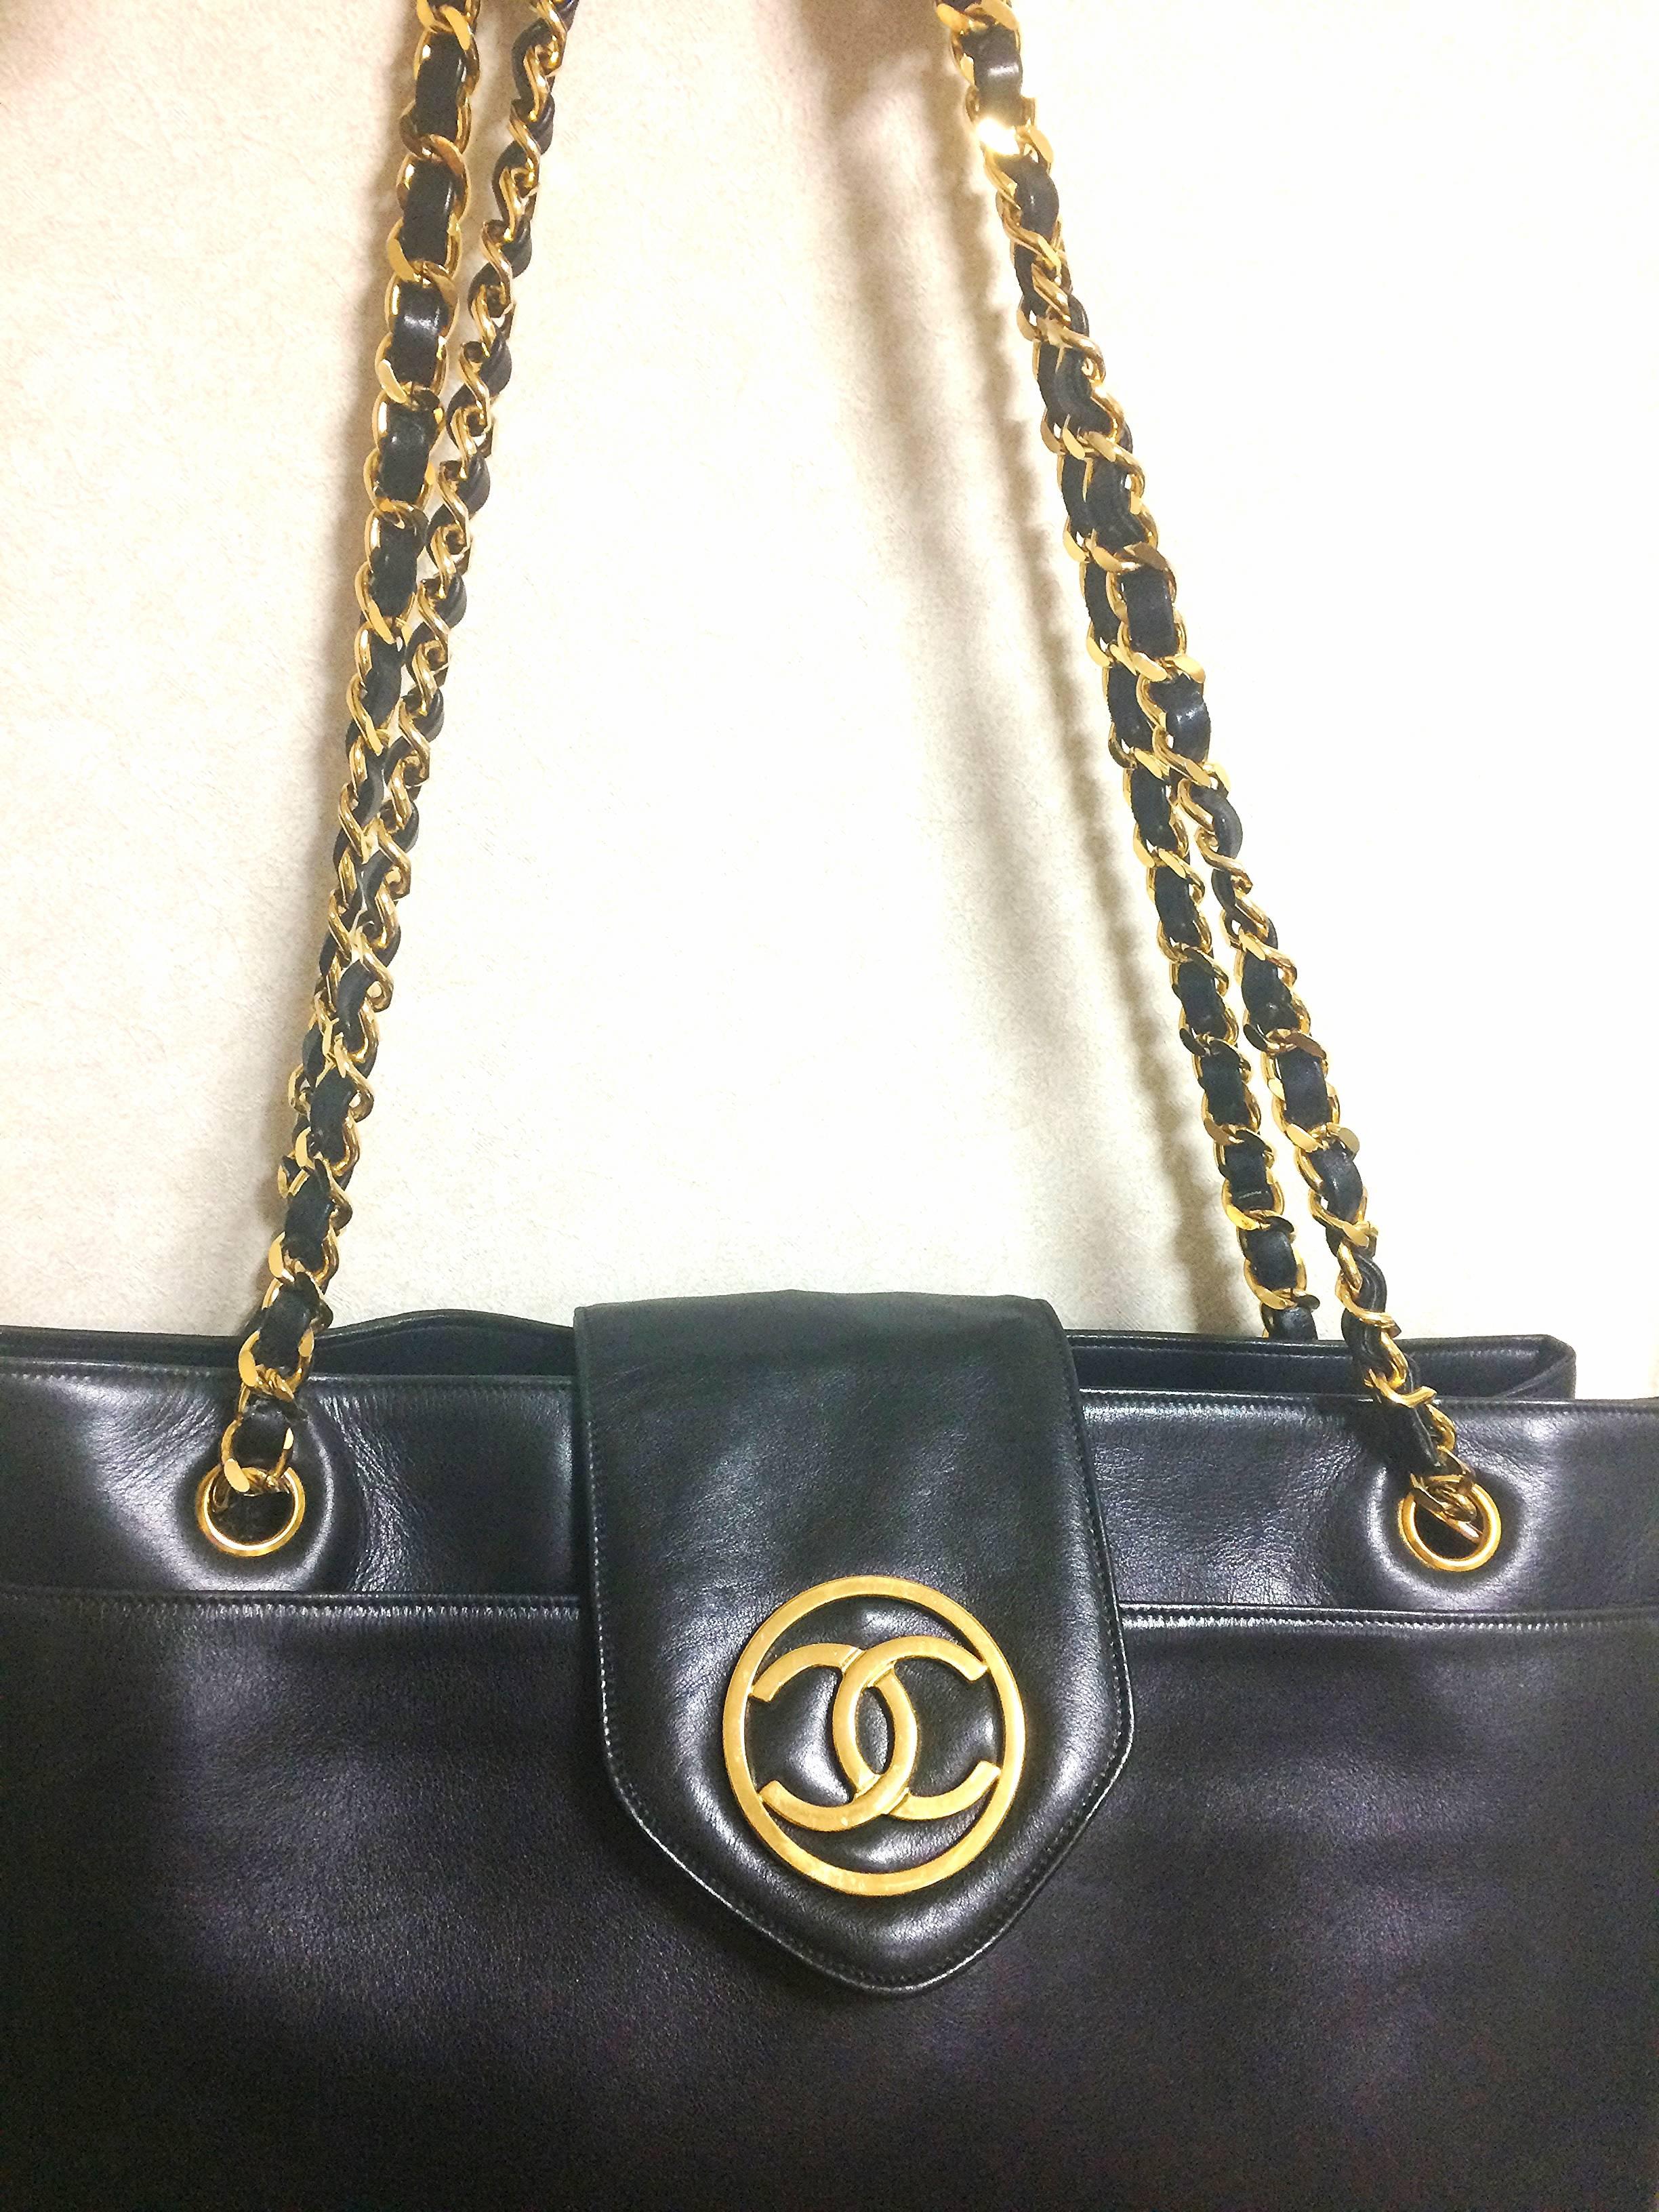 Vintage CHANEL black calf leather large chain shoulder tote bag with golden CC. 1